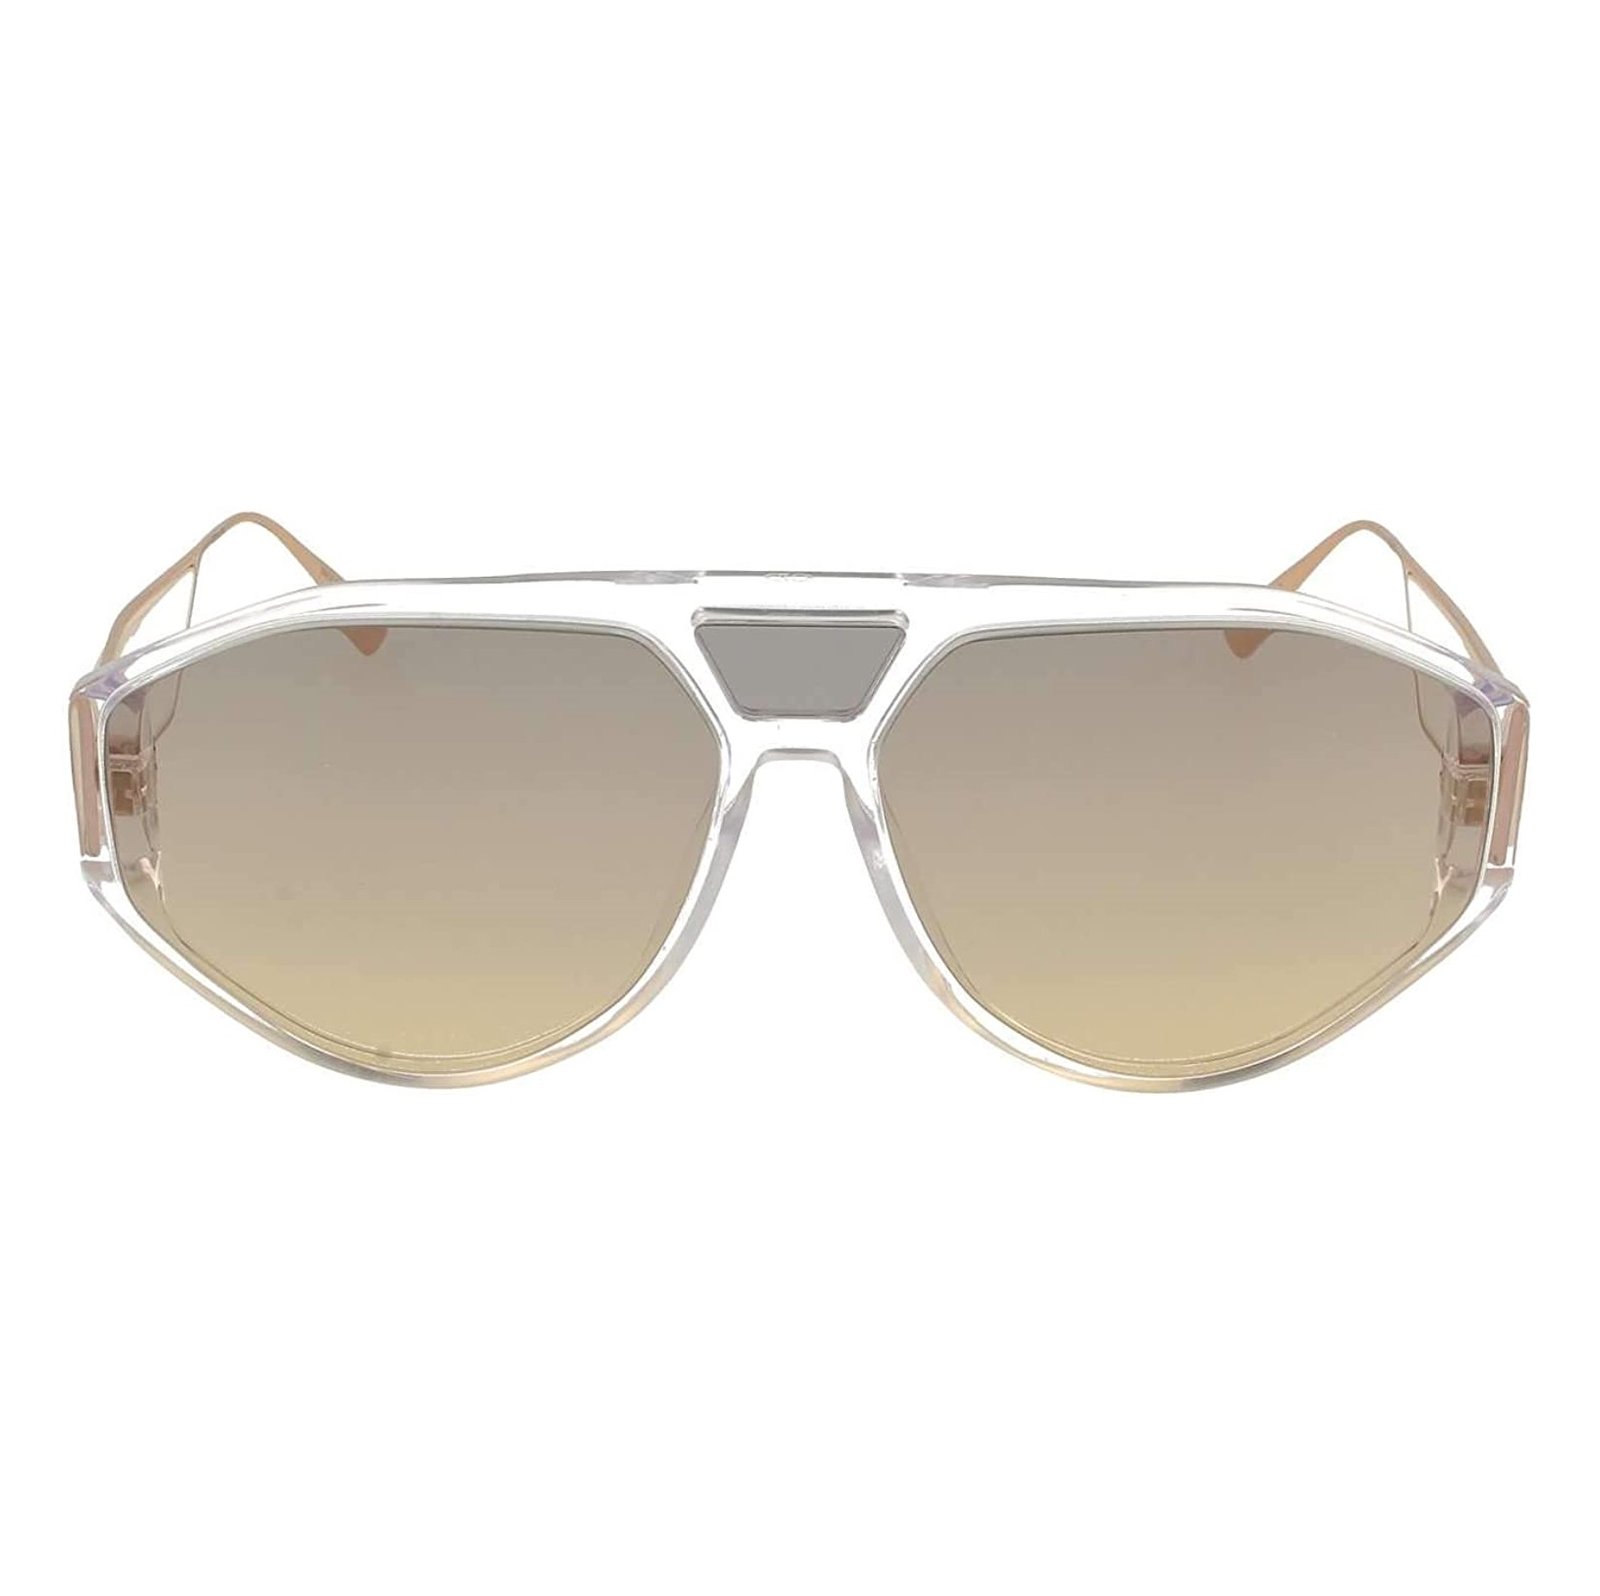 Christian Dior Clan 1 9001L Sunglasses - Purevision - The Sunglasses ...